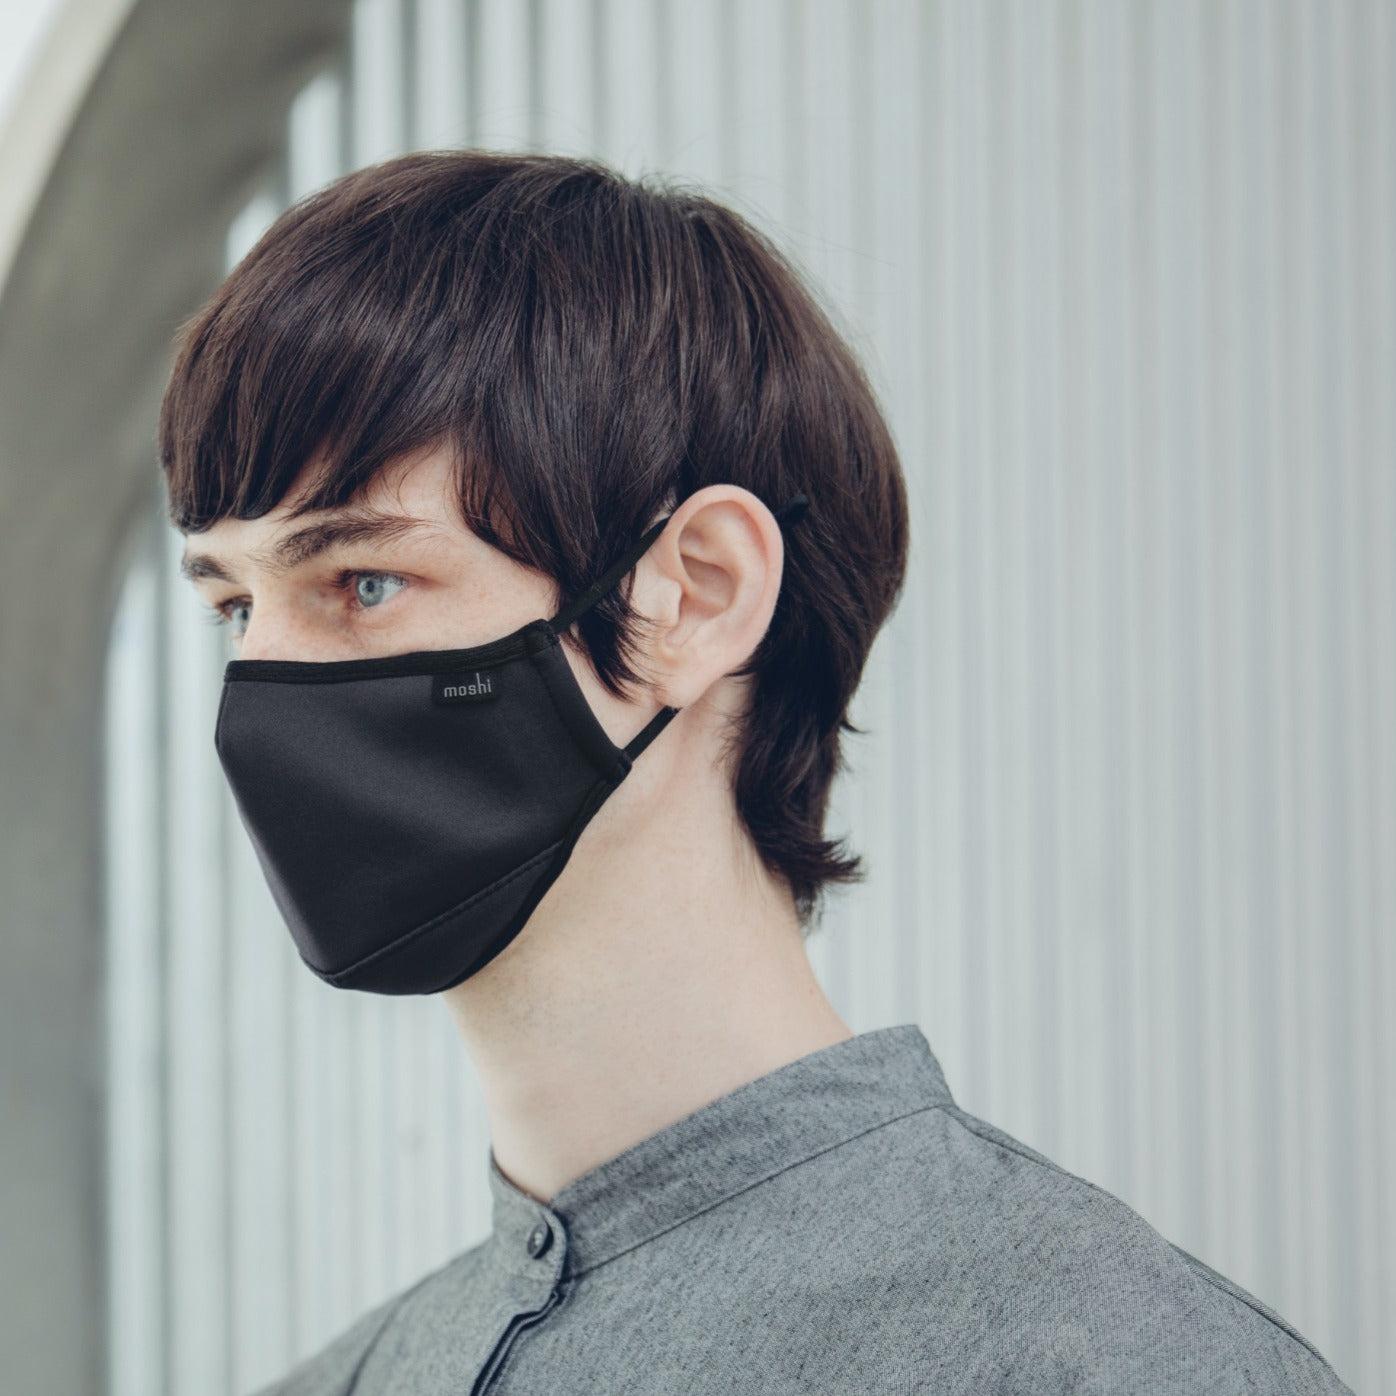 ماسك قماشي قياس لارج لون أسود OMNIGUARD Mask - Washable/Reusable Facial Mask Large - Moshi - cG9zdDozNjA3NDQ=